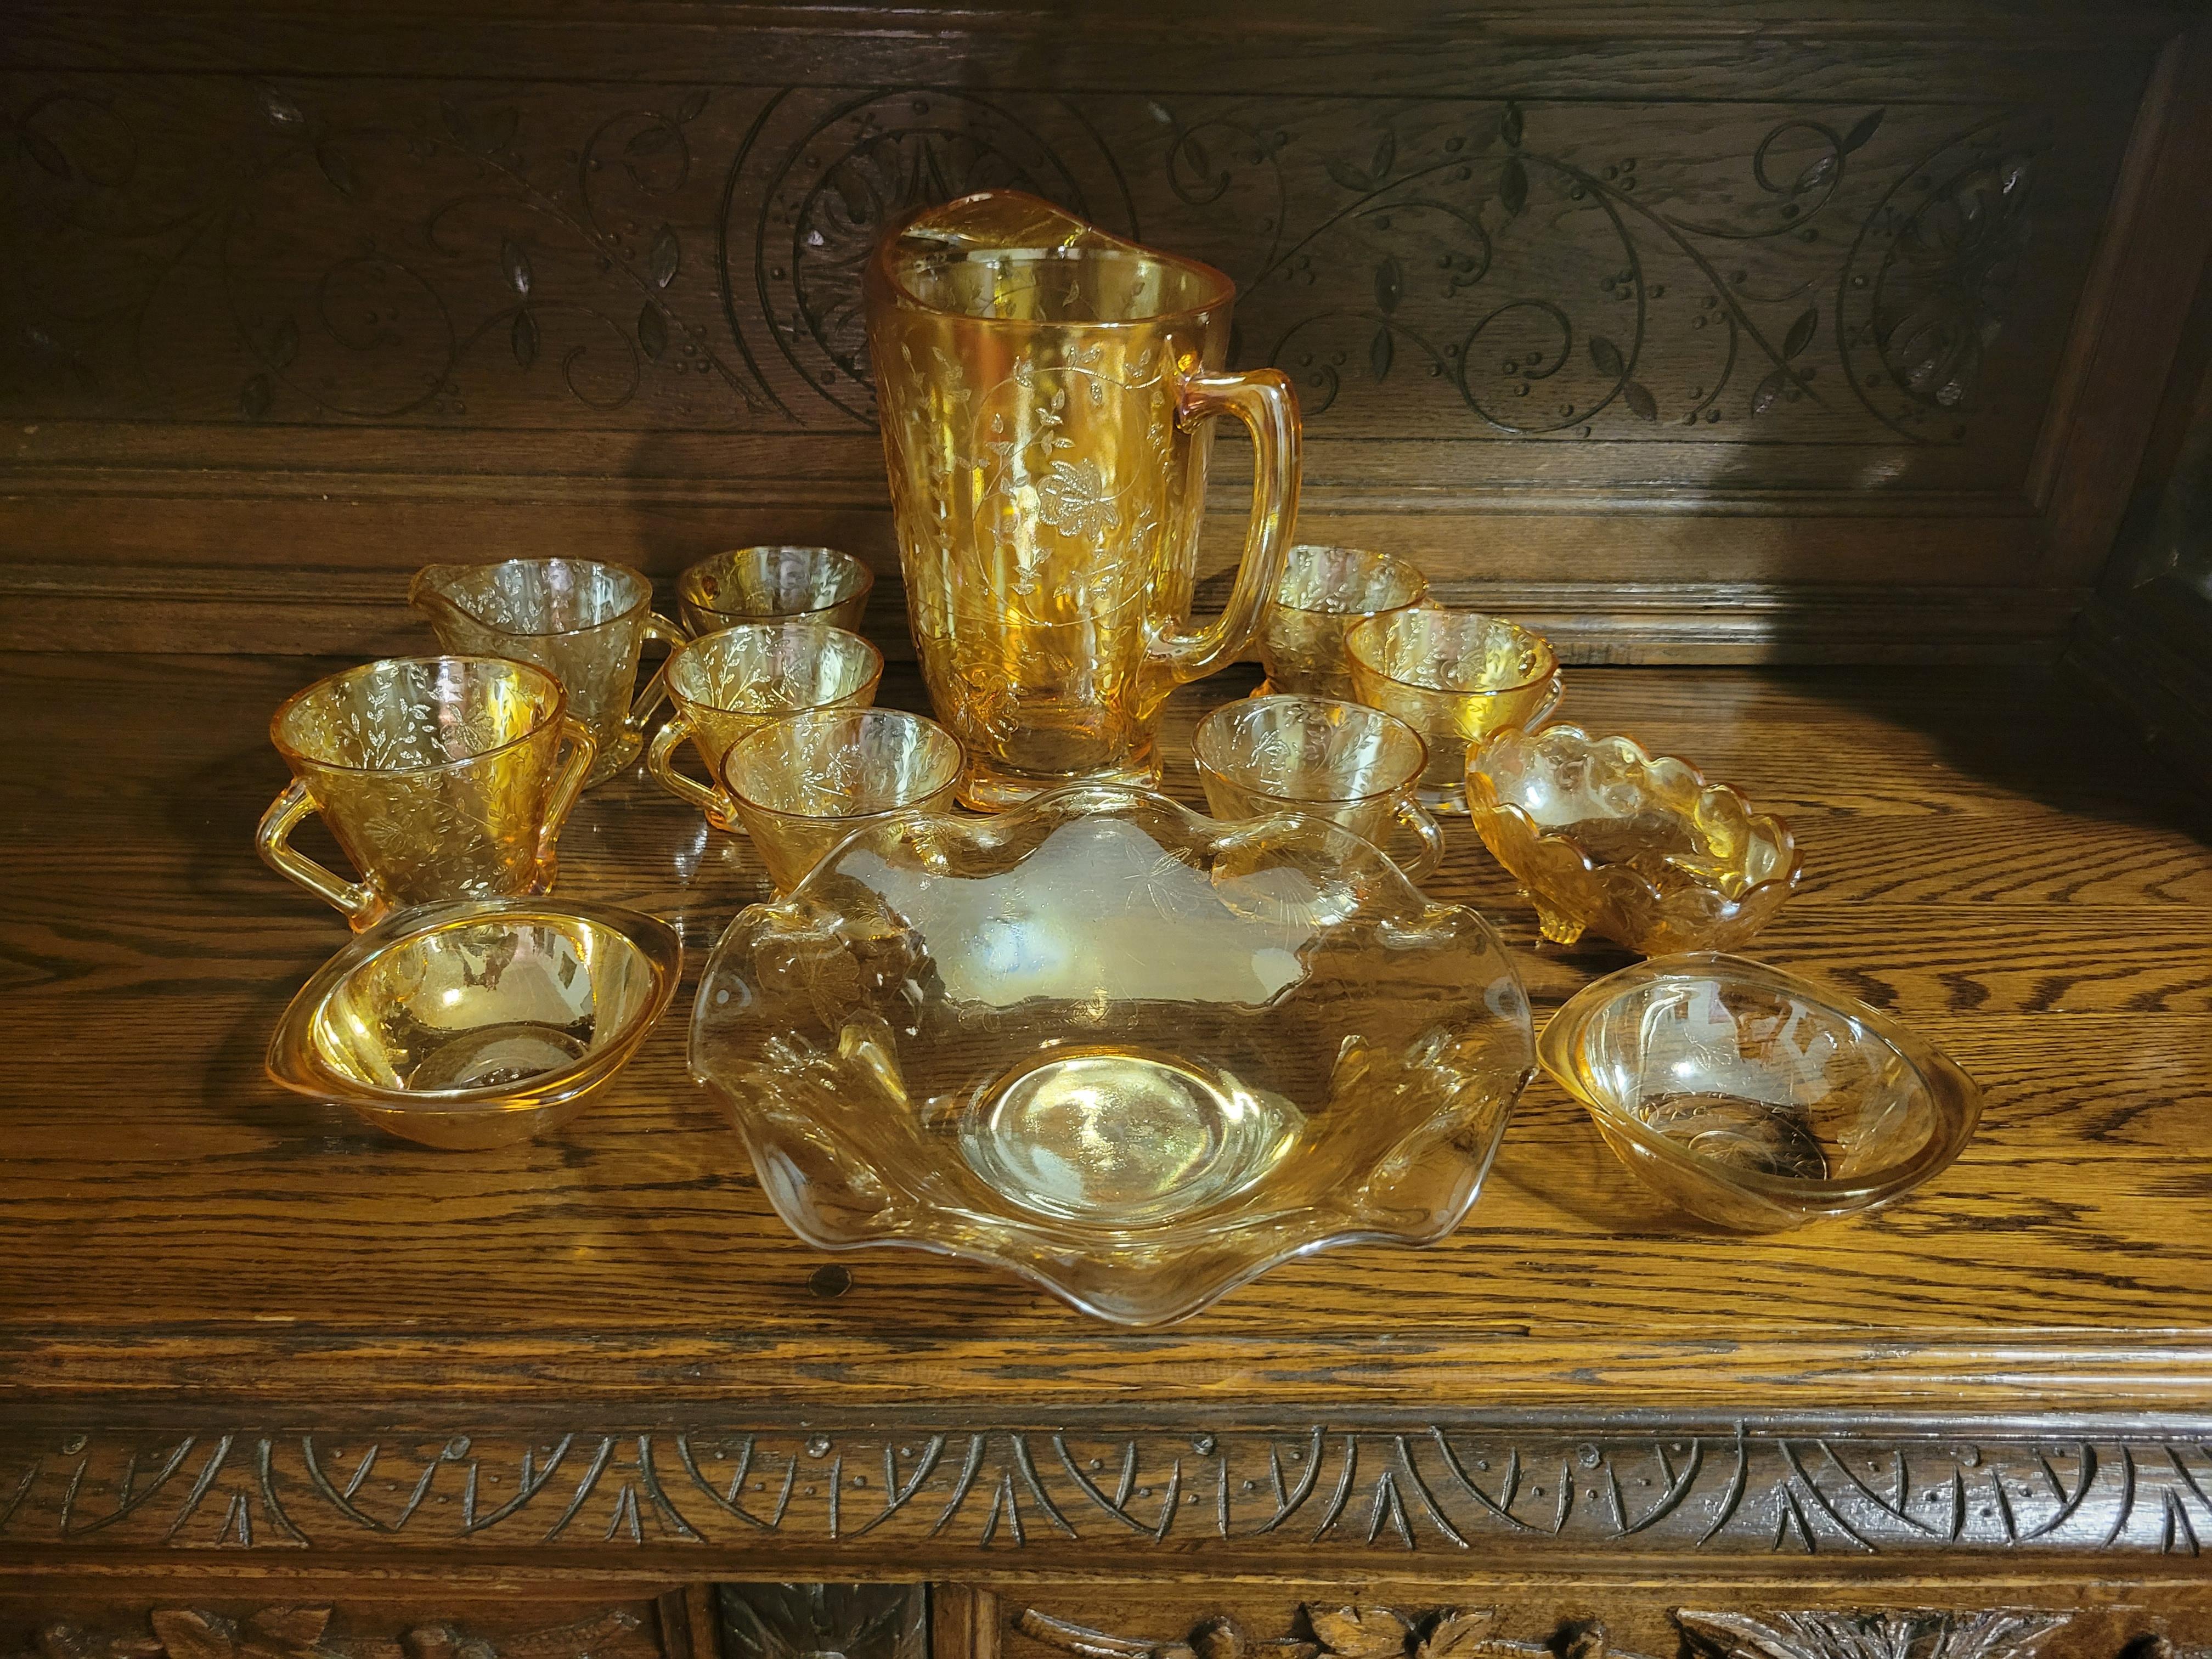 1964 Jeannette Floragold Iridescent Glassware Set - 13 pieces For Sale 3